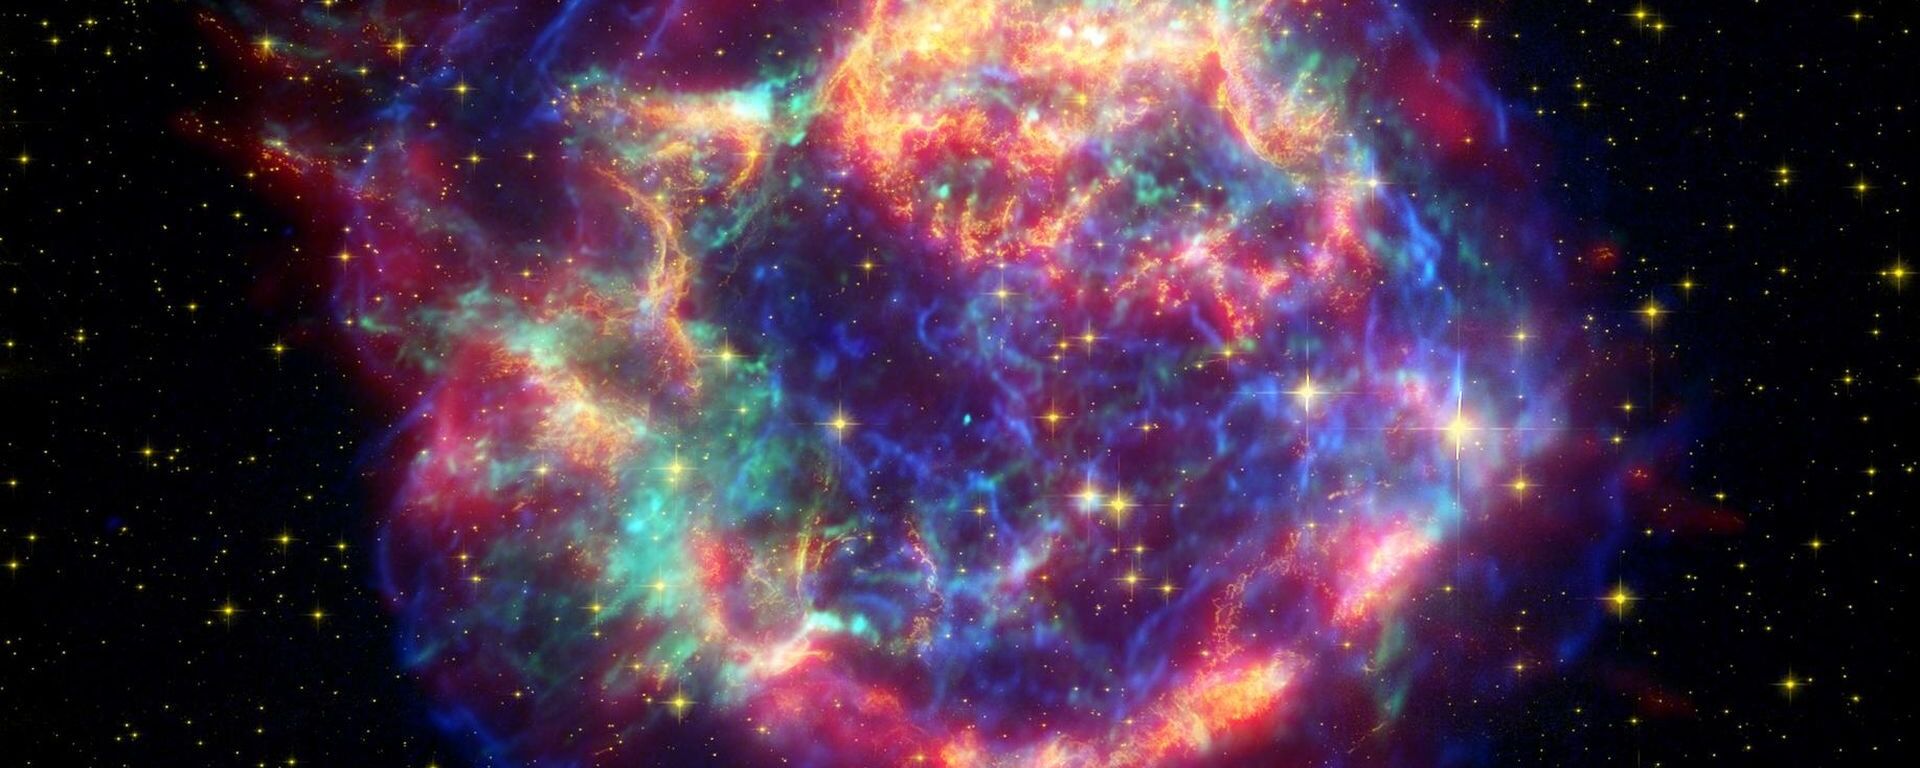 Supernova remnant Cassiopeia A - Sputnik International, 1920, 17.09.2021